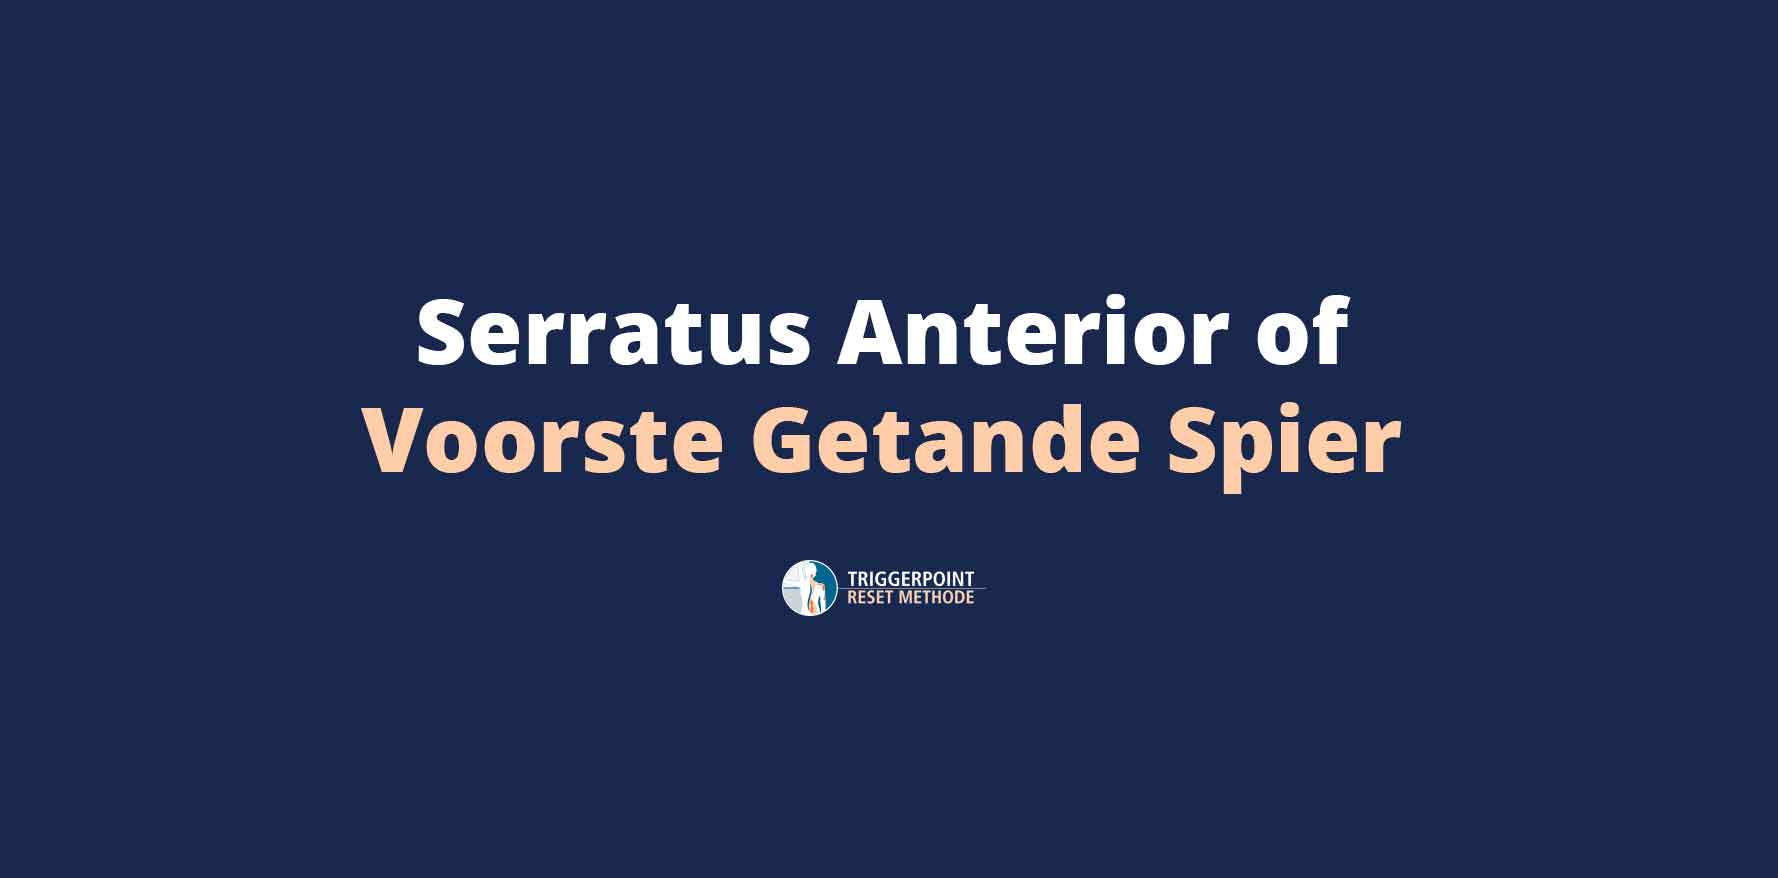 Voorste getande spier of serratus anterior